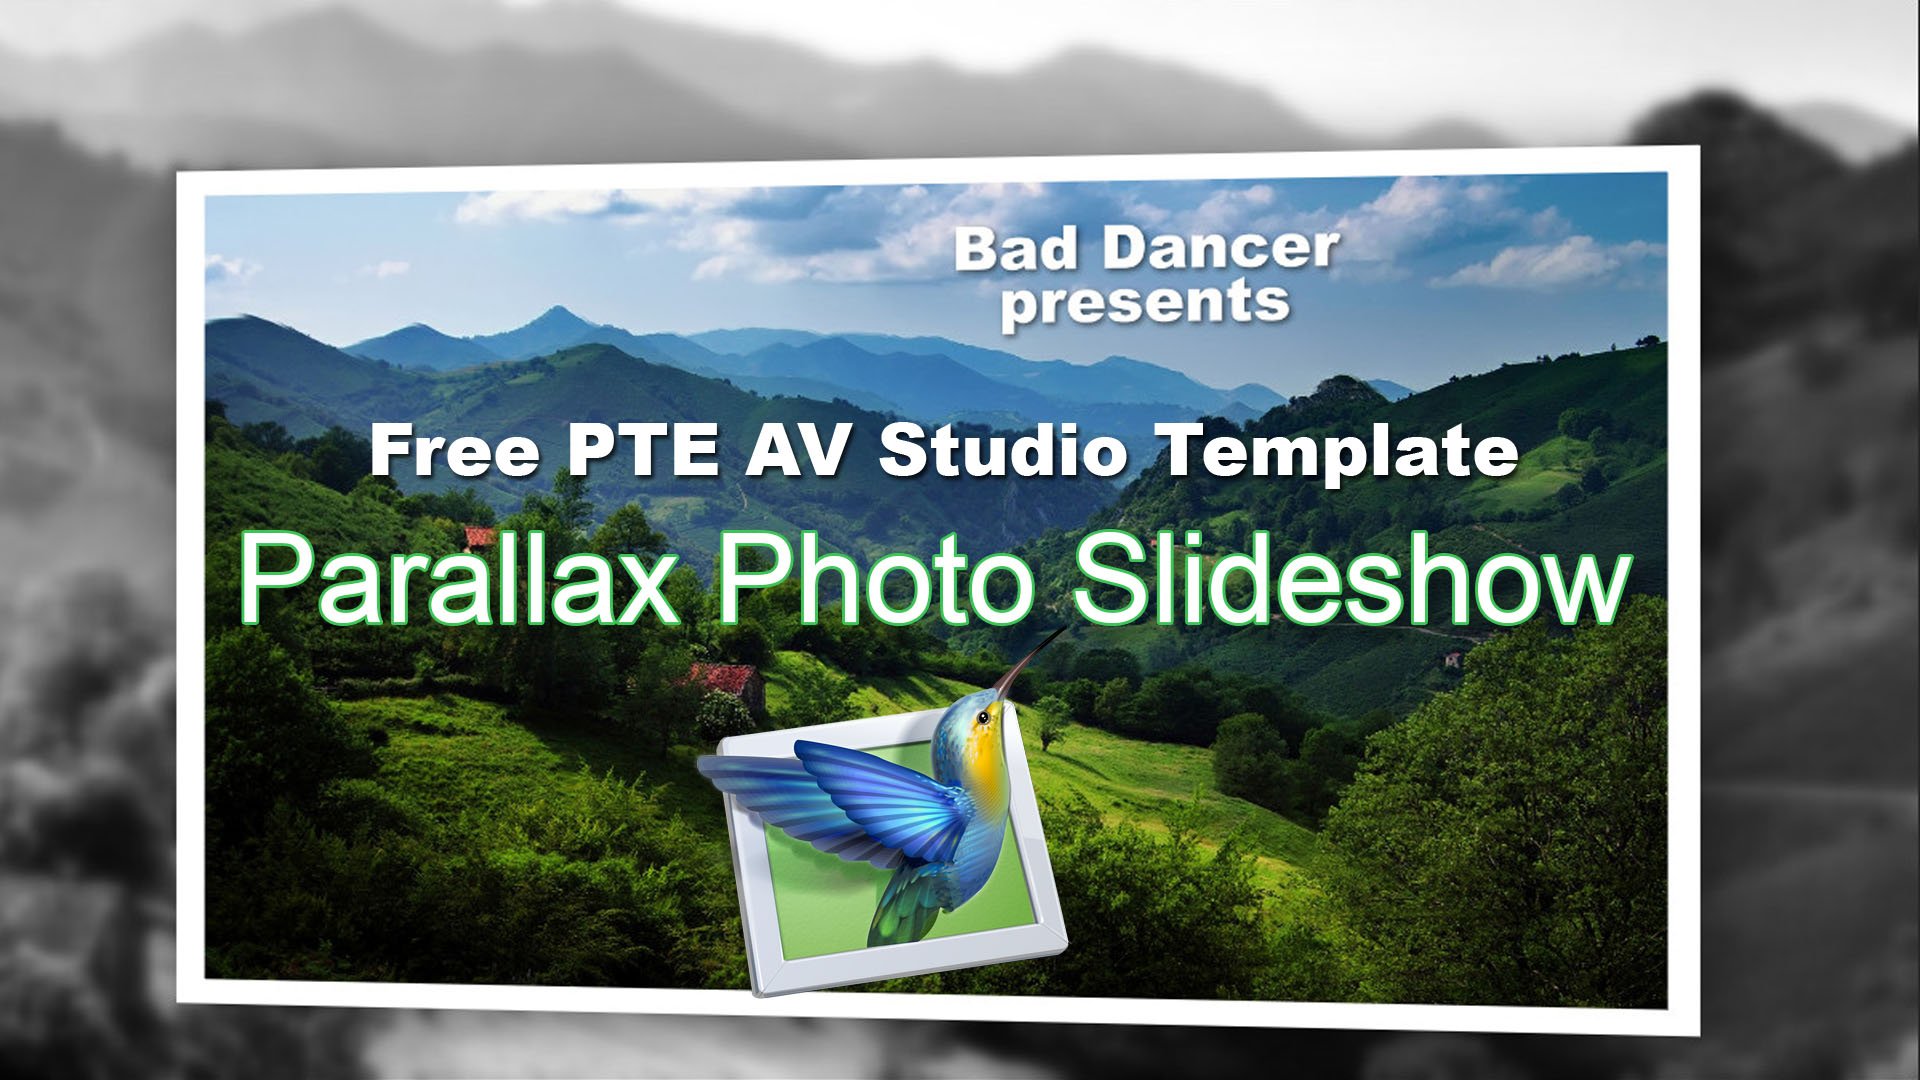 Free PTE AV Studio Pro project - Parallax PhotoSlideshow ID 22062024